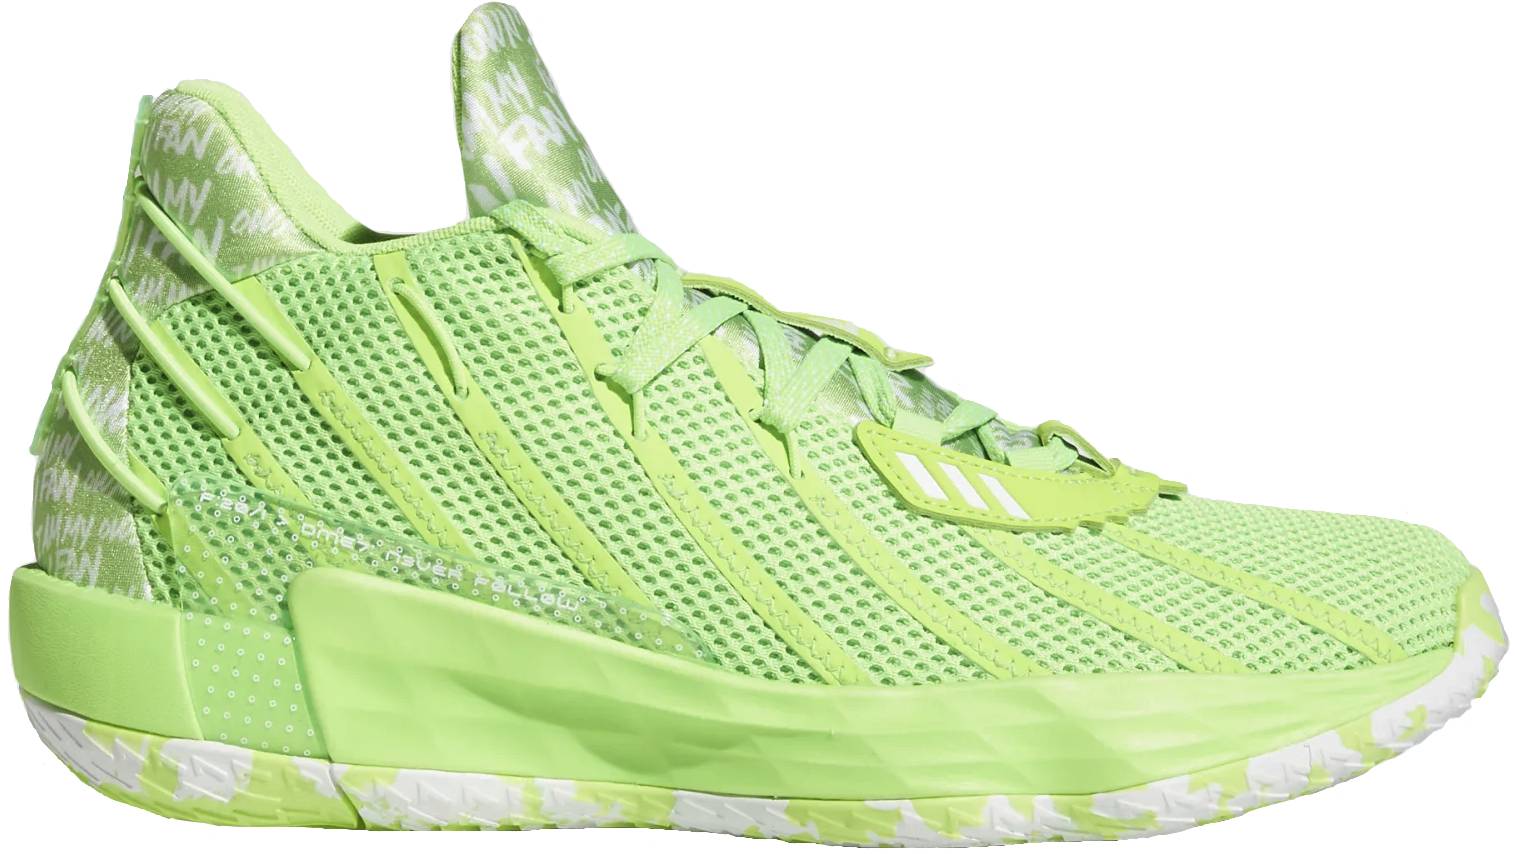 green adidas basketball shoes